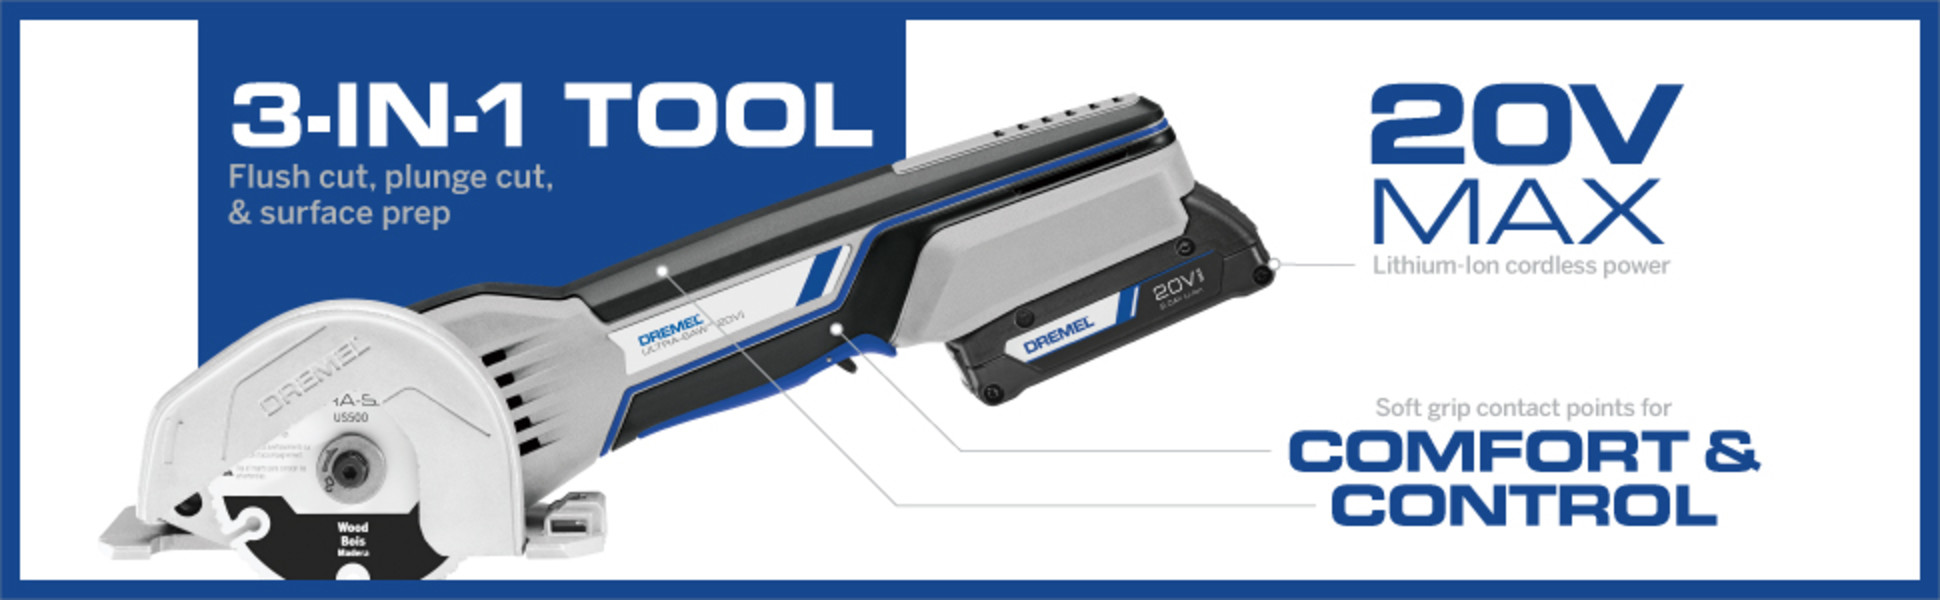 Dremel US20V-01 - 20V Max Cordless Ultra-Saw 1 Battery Tool Kit